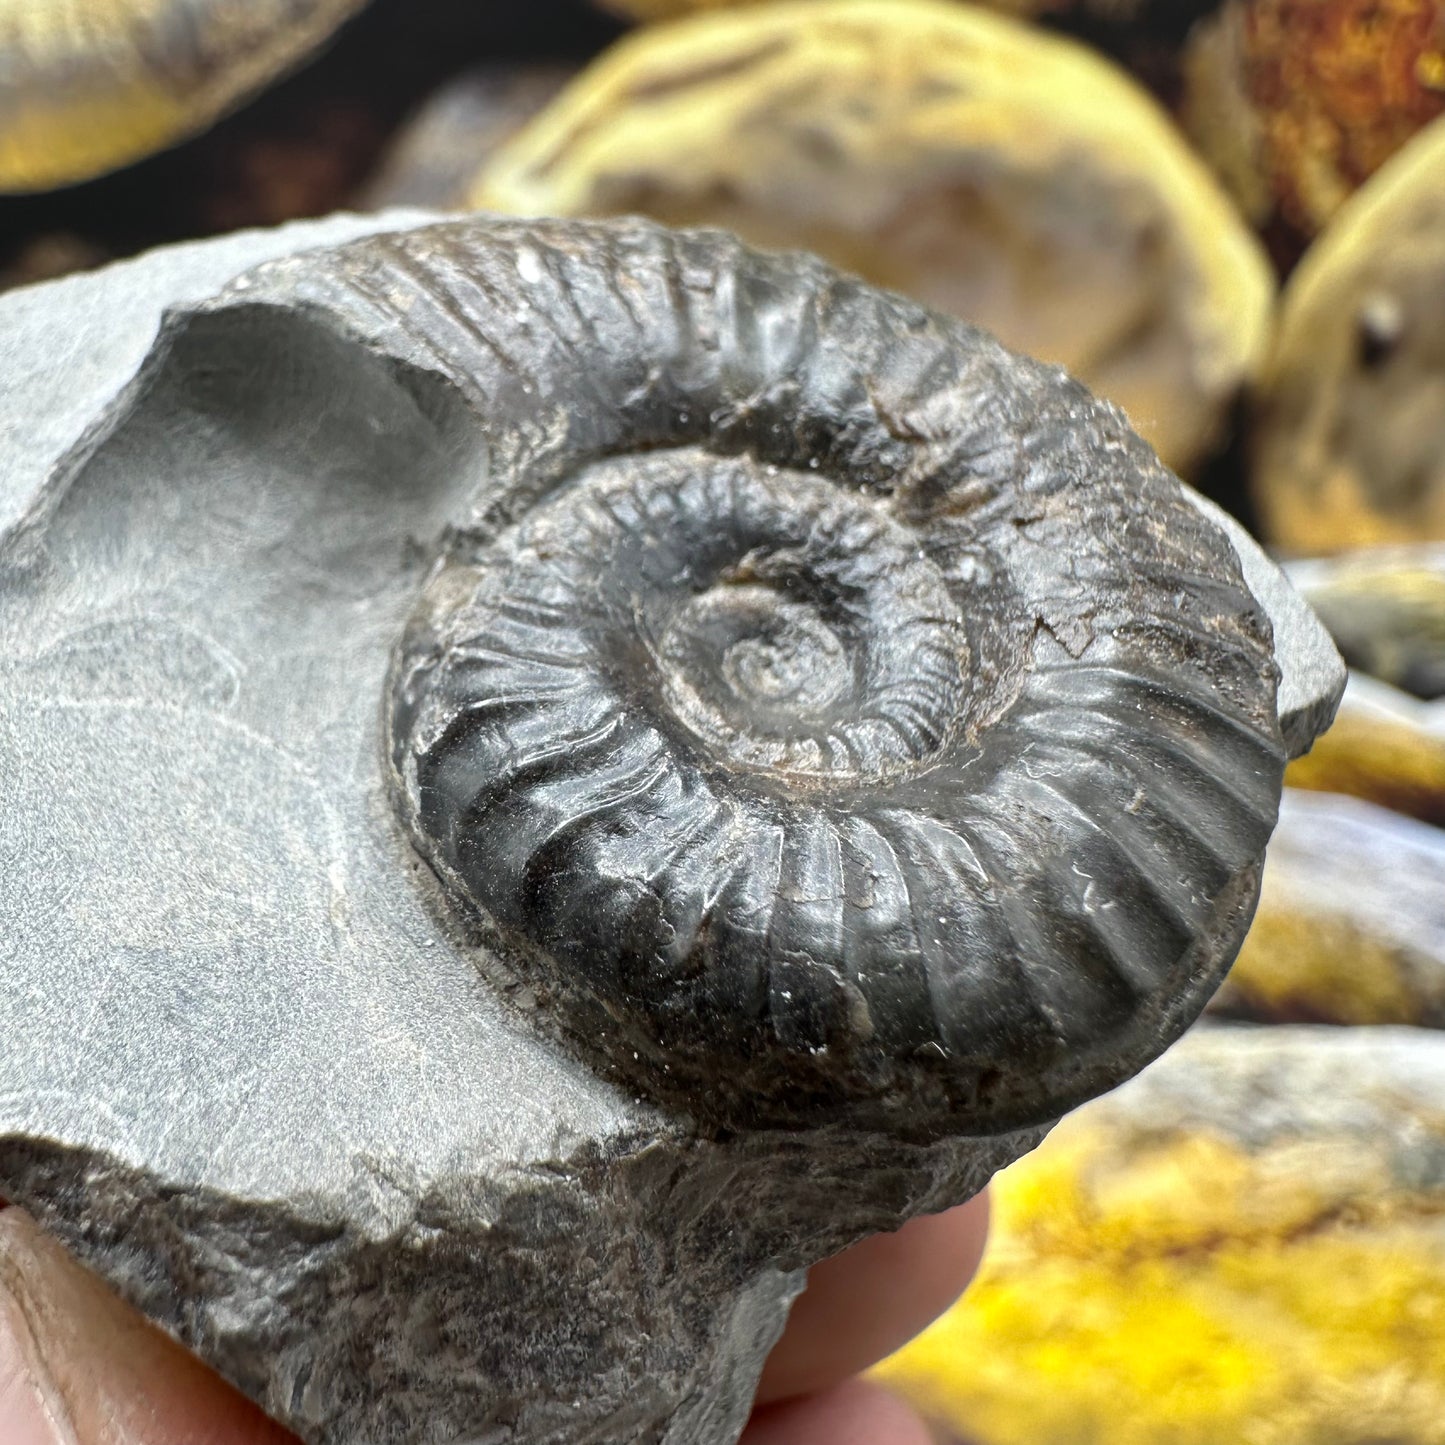 Grammoceras thoaurense ammonite shell fossil - Whitby, North Yorkshire